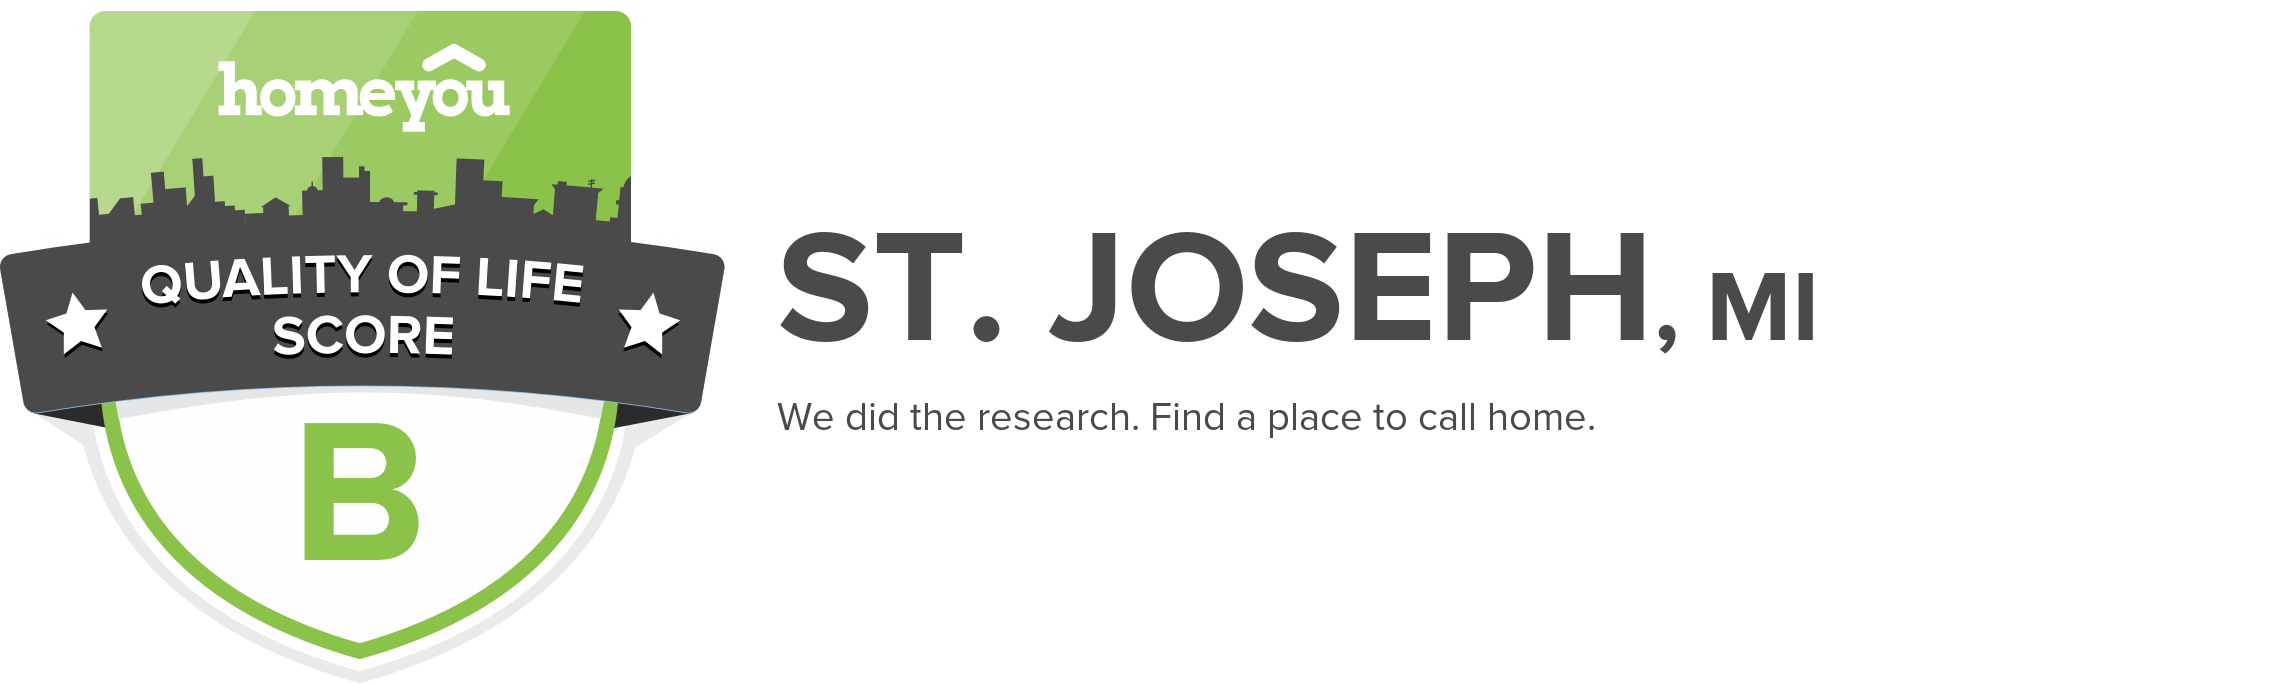 St. Joseph, MI